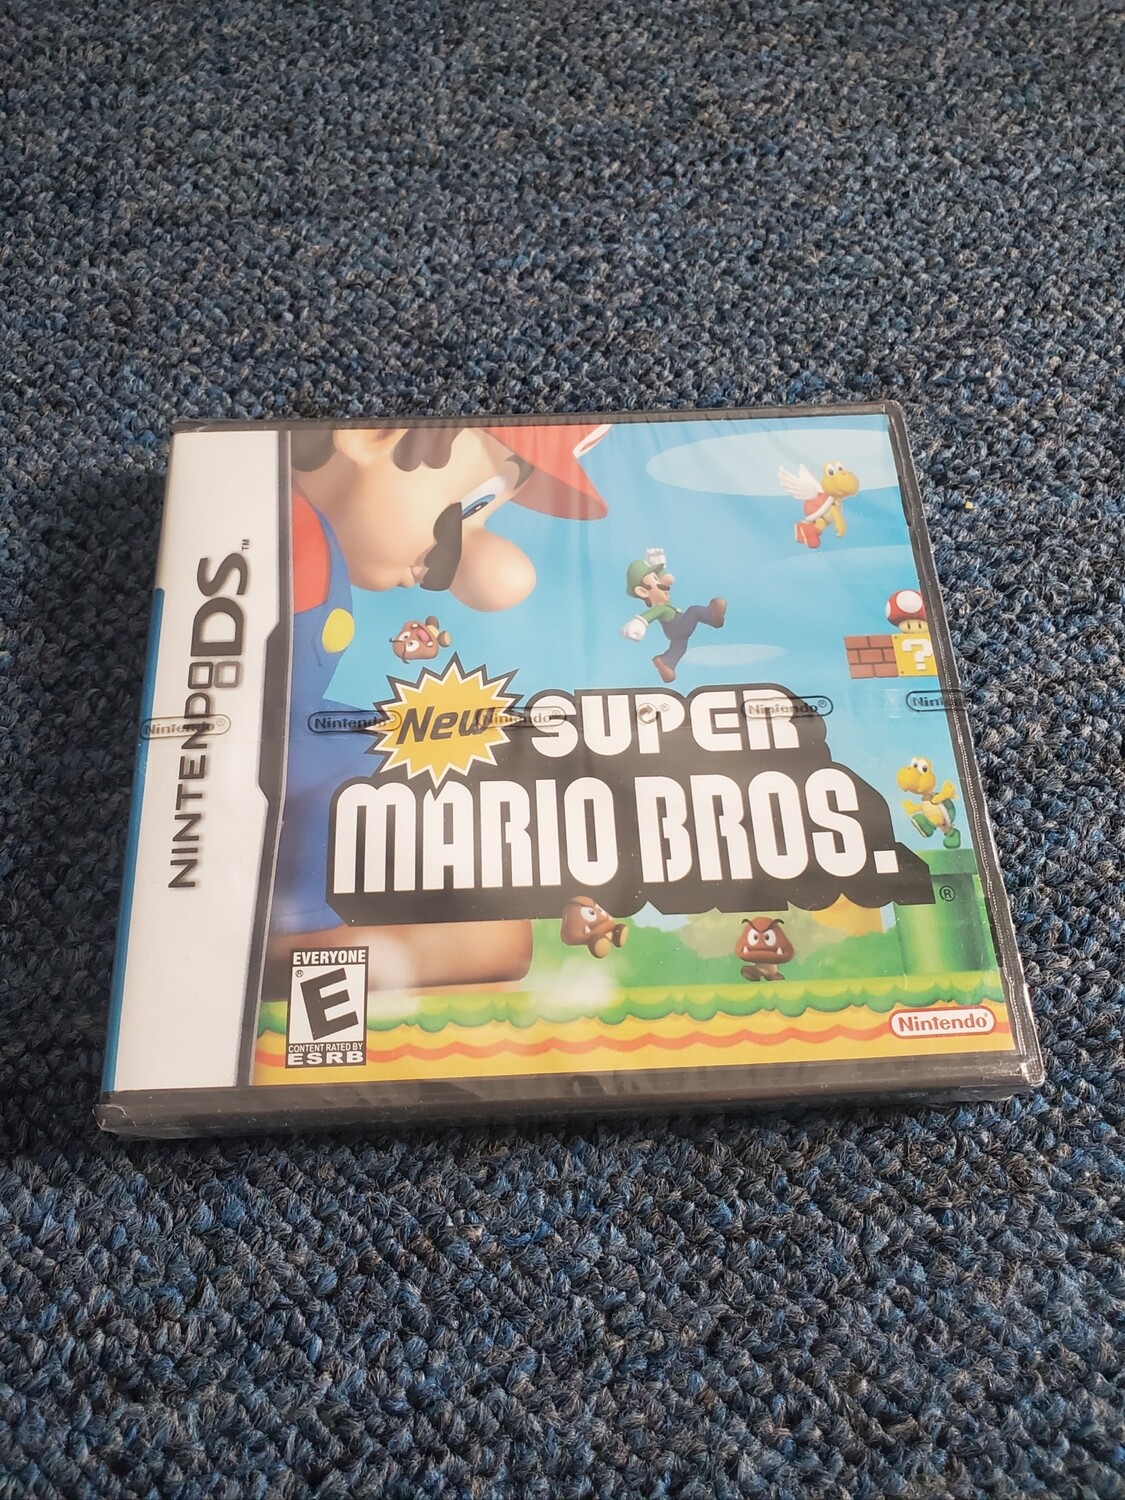 New Super Mario Bros for Nintendo DS!